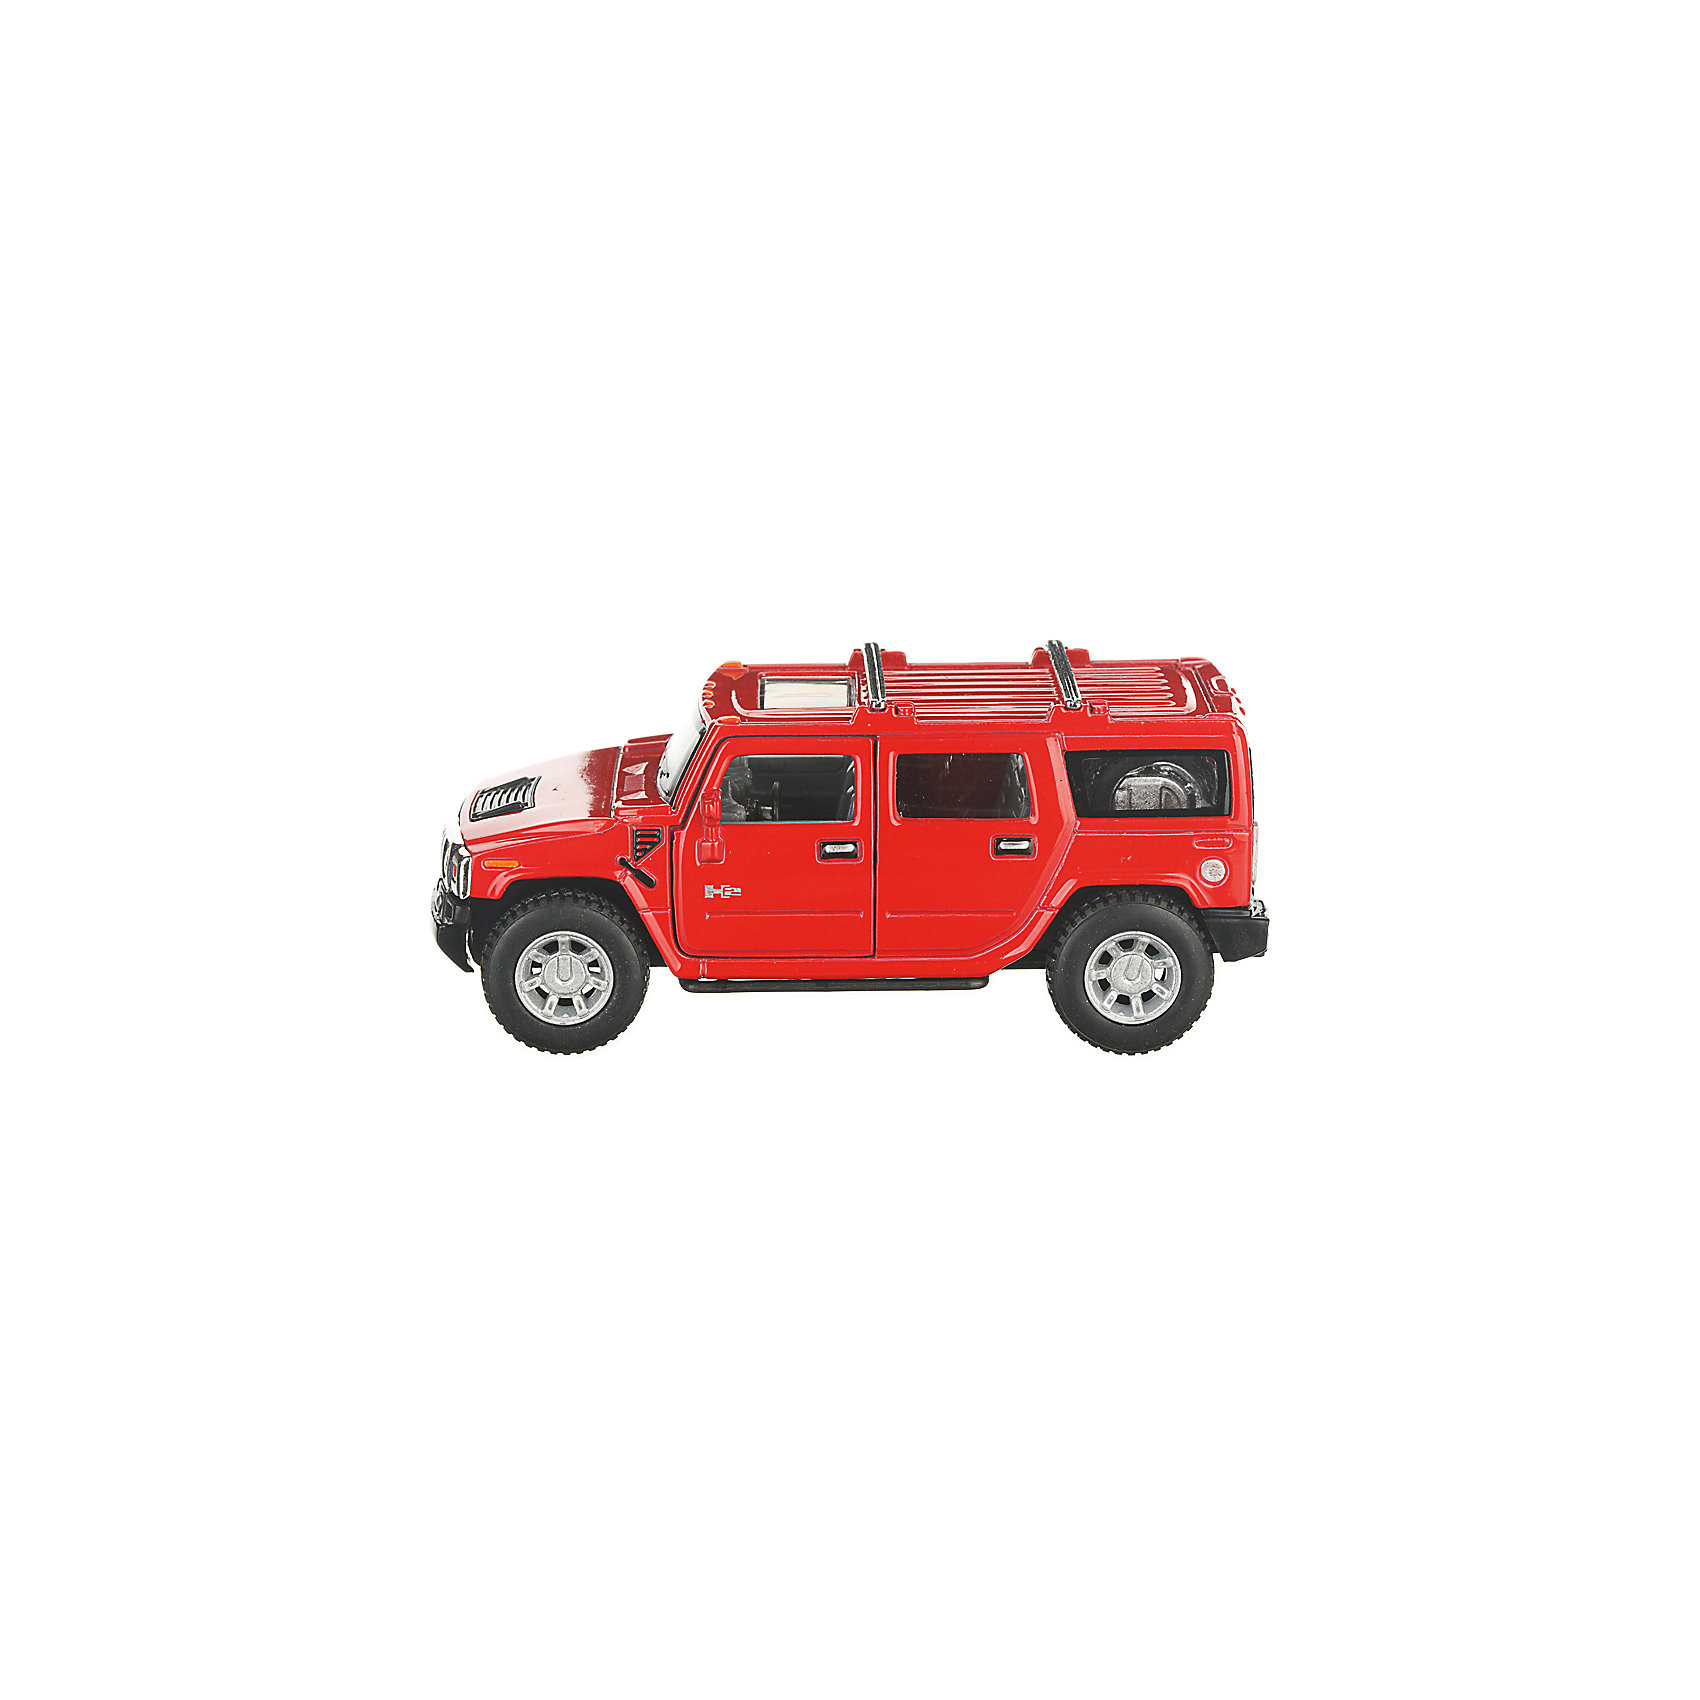 Коллекционная машинка 2008 Hummer H2, красная Serinity Toys 13233458